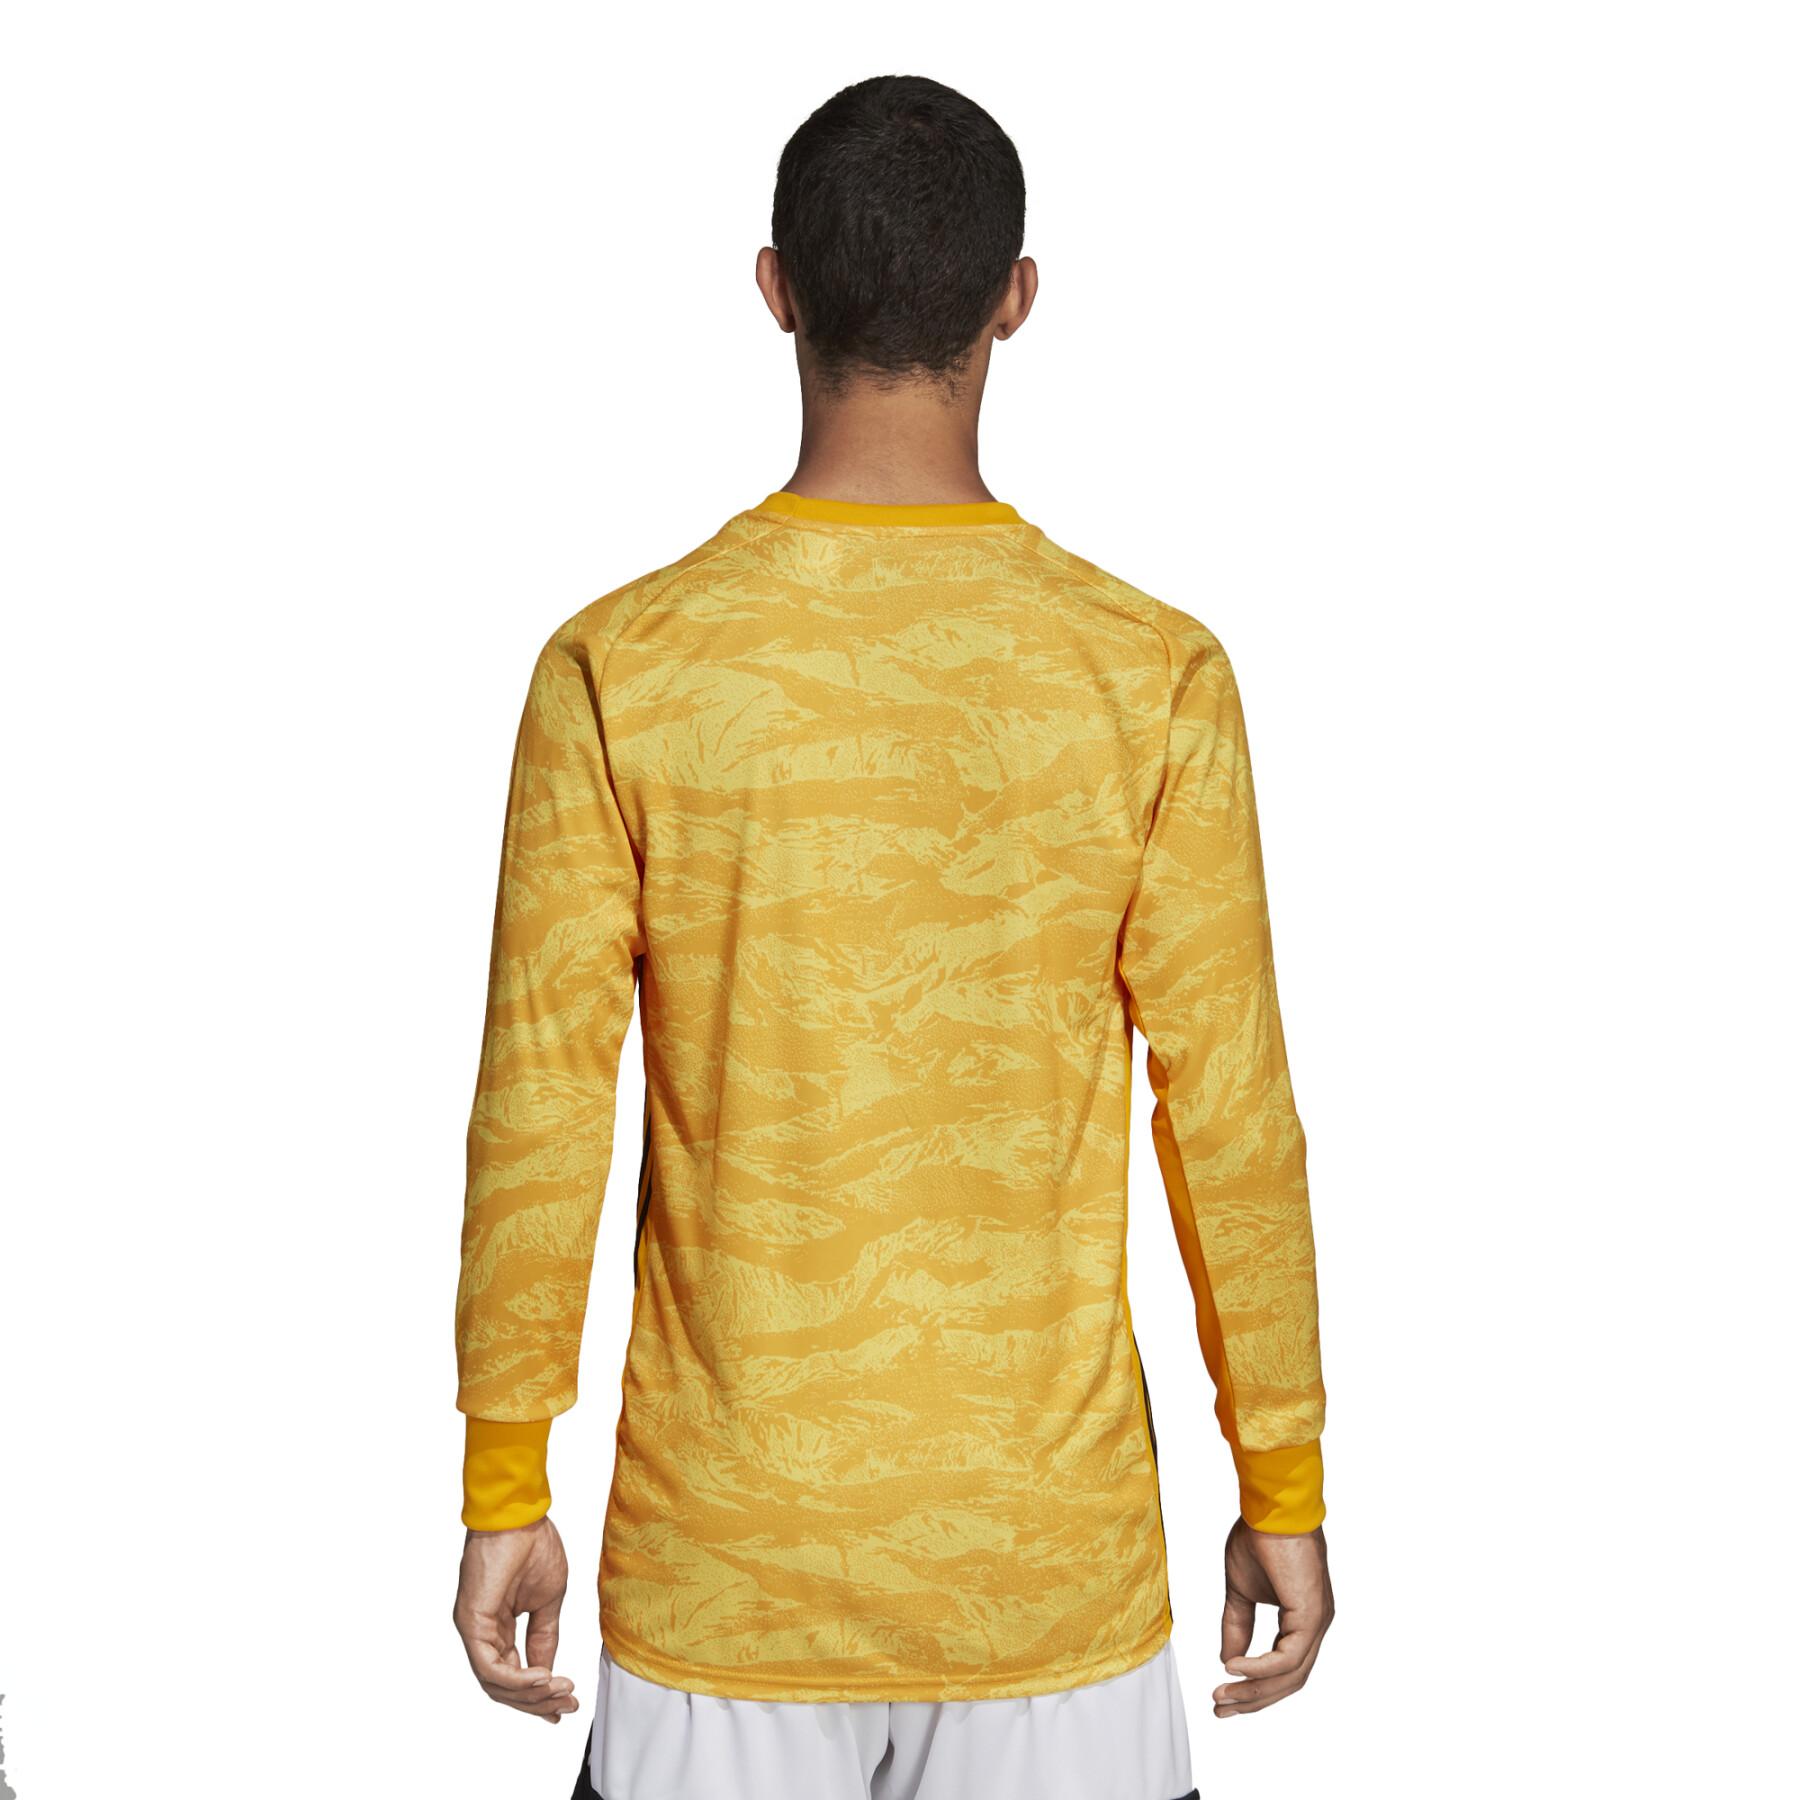 Camisola do guarda-redes adidas AdiPro 18